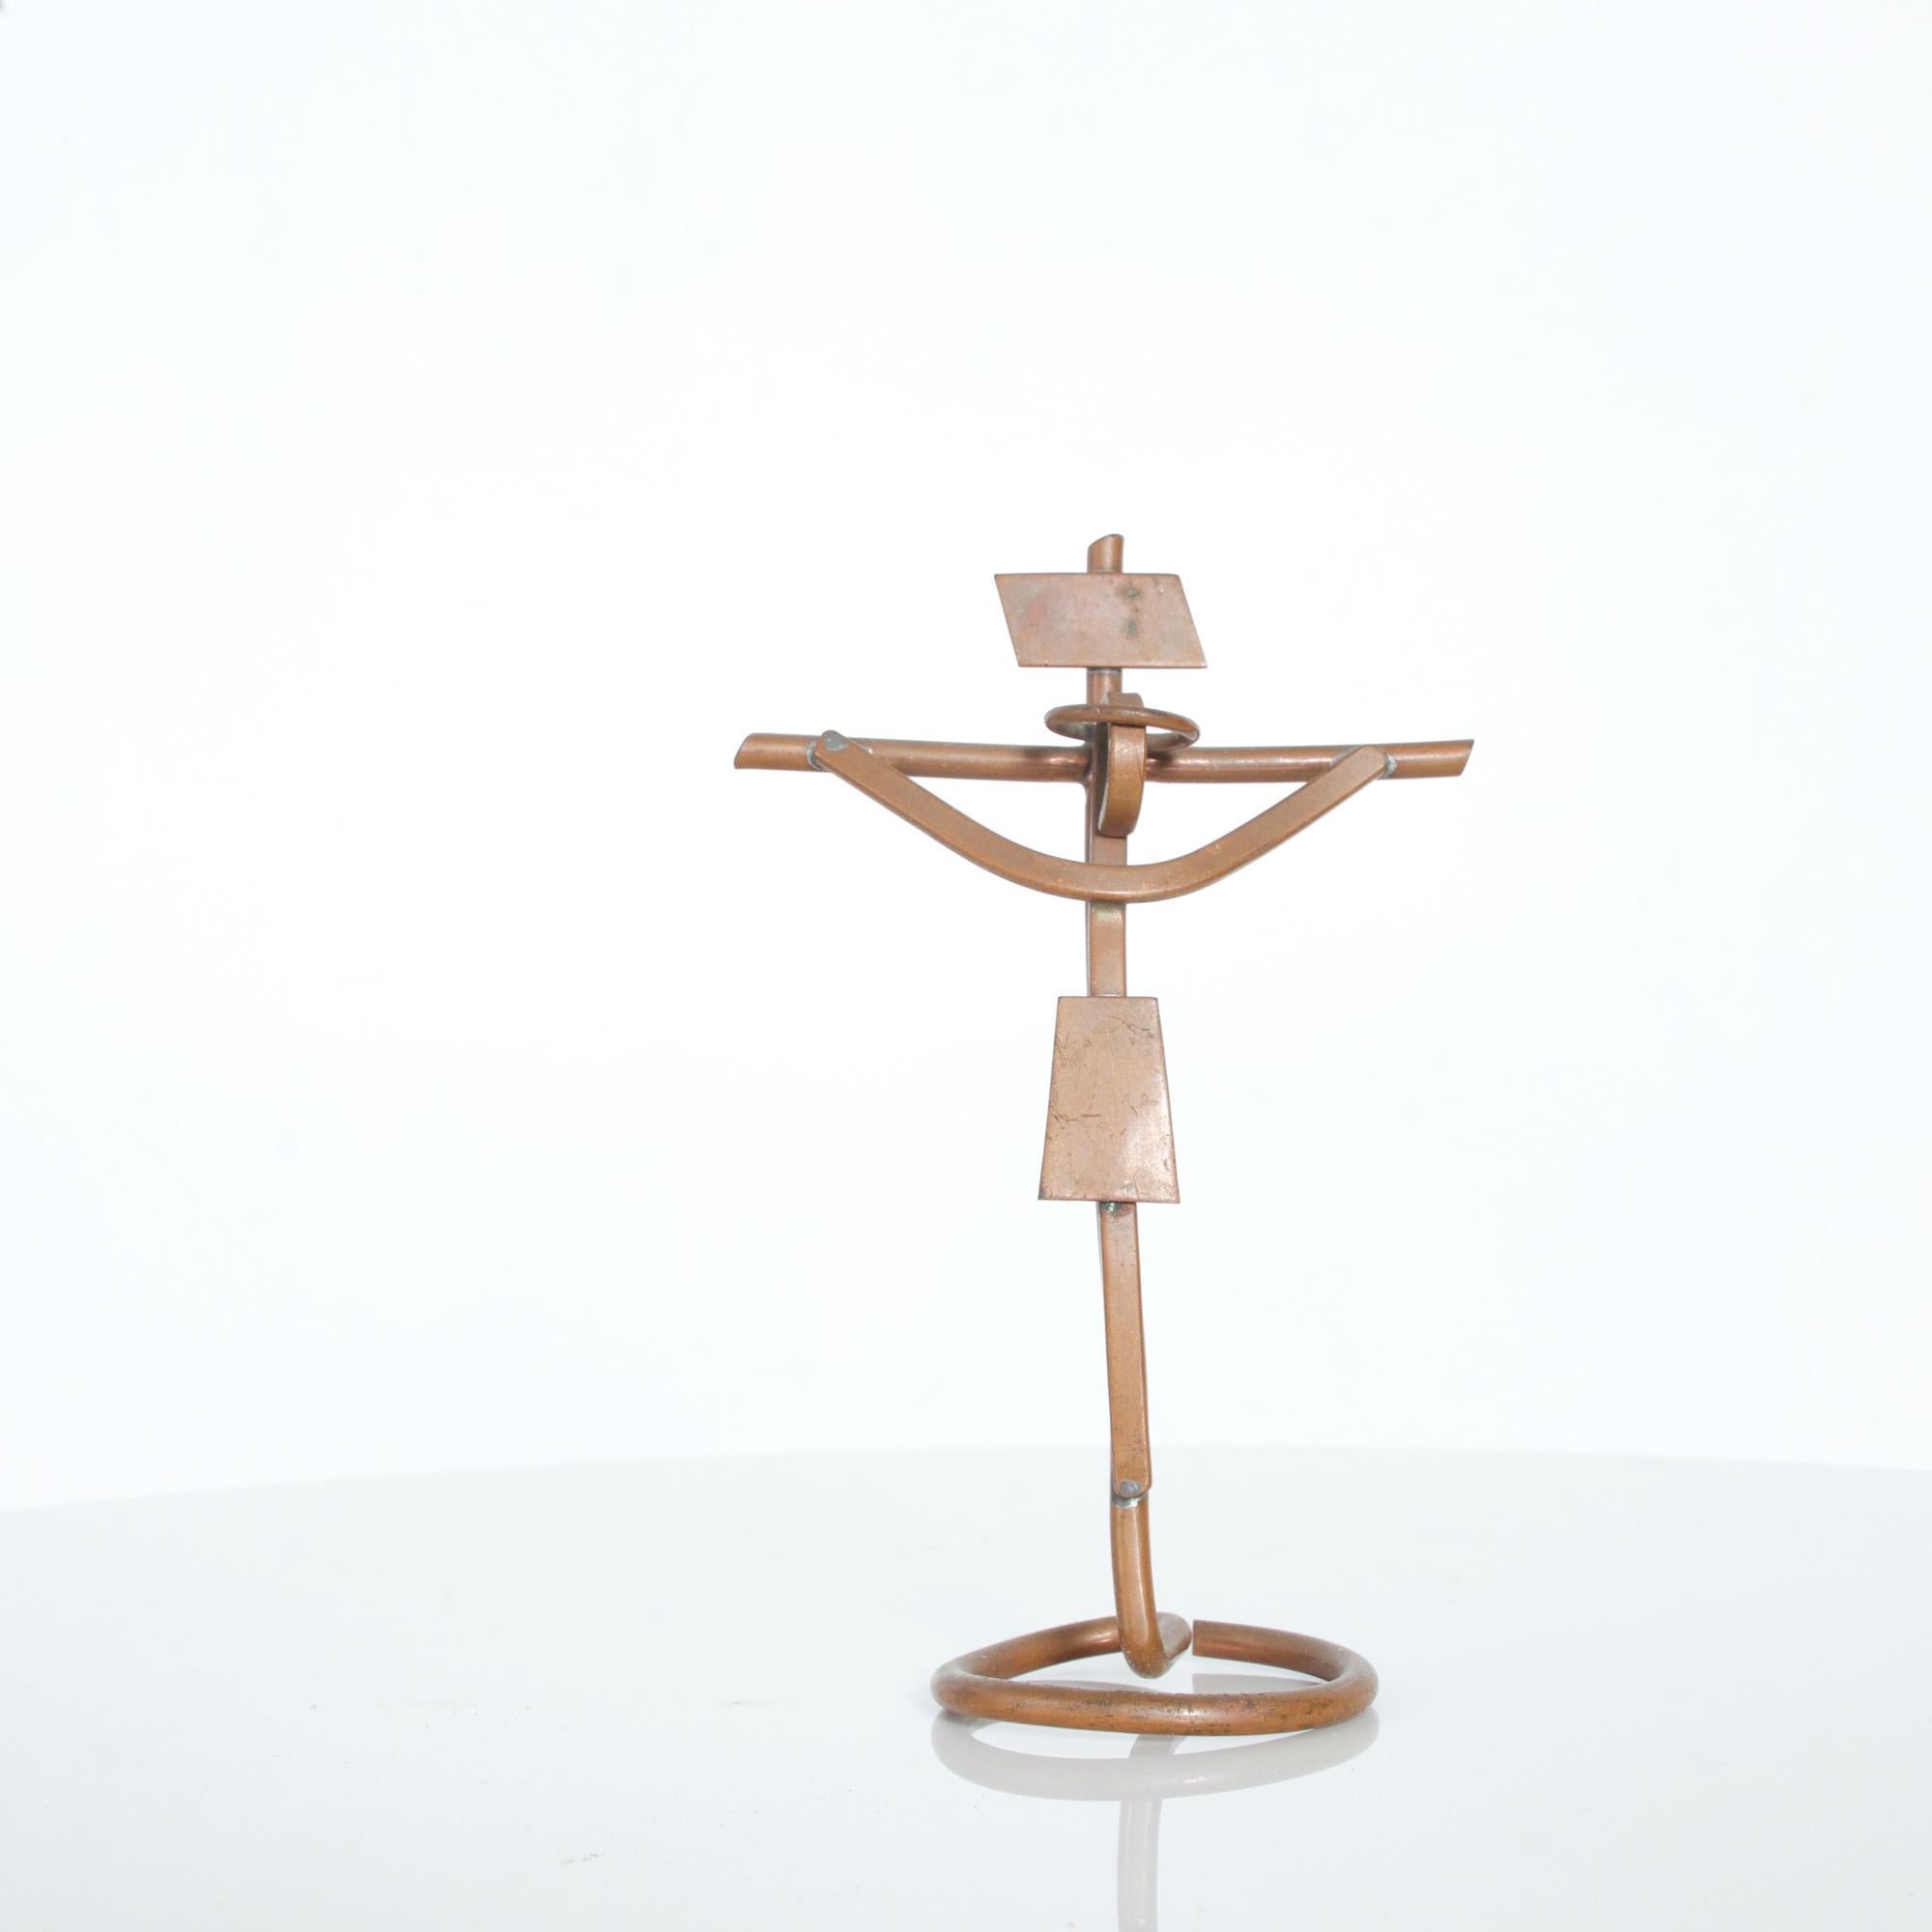 Attribution German sculptor Mathias Goeritz: Stunning abstract art sculptural crucifix cross in copper and silver.
Mid-Century Modern Religious Art circa 1980s.
Measures: 6.25